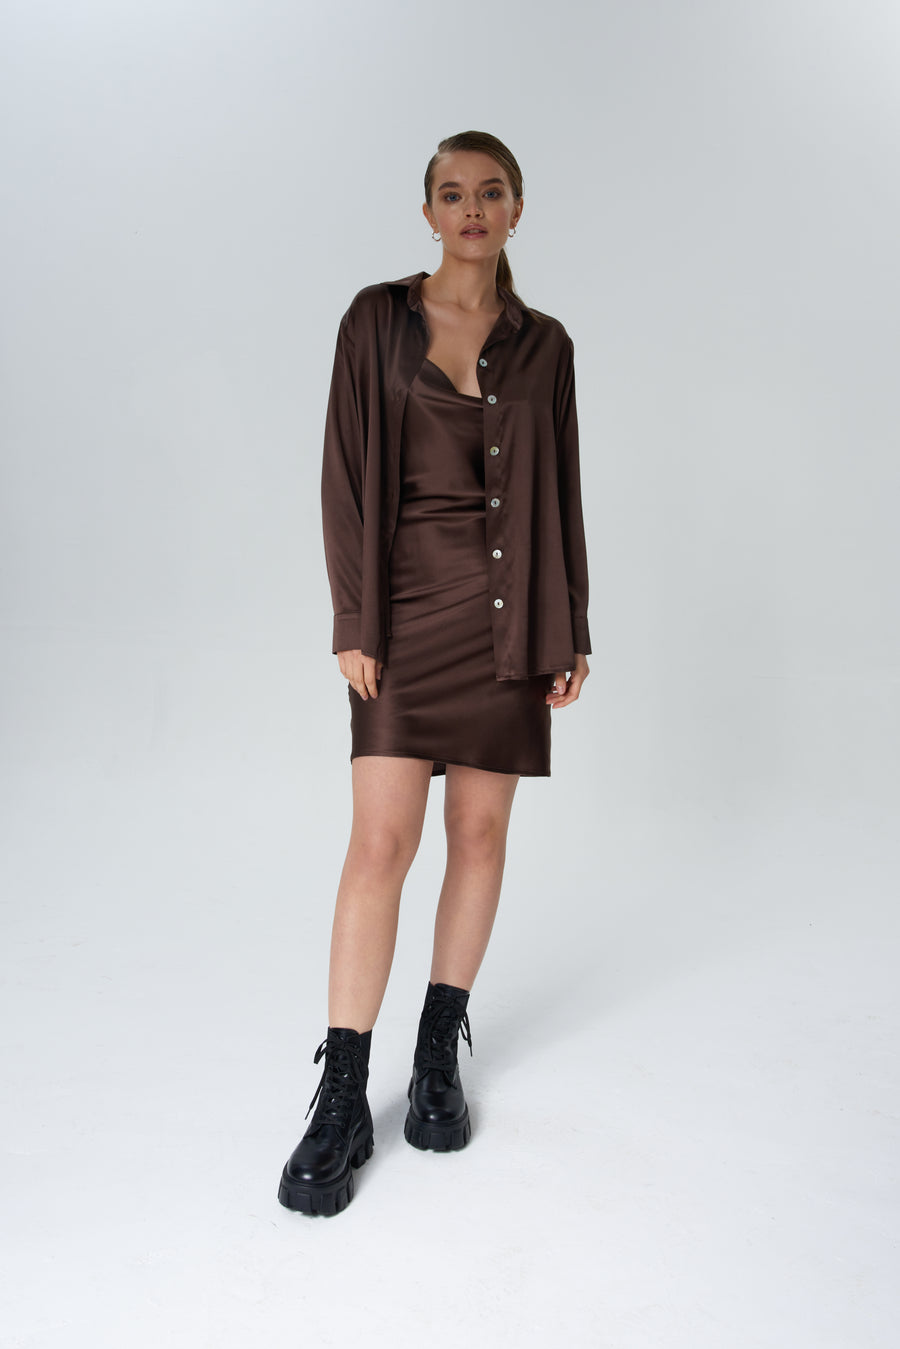 Mini silk satin slip dress with cowl neck in chocolate brown